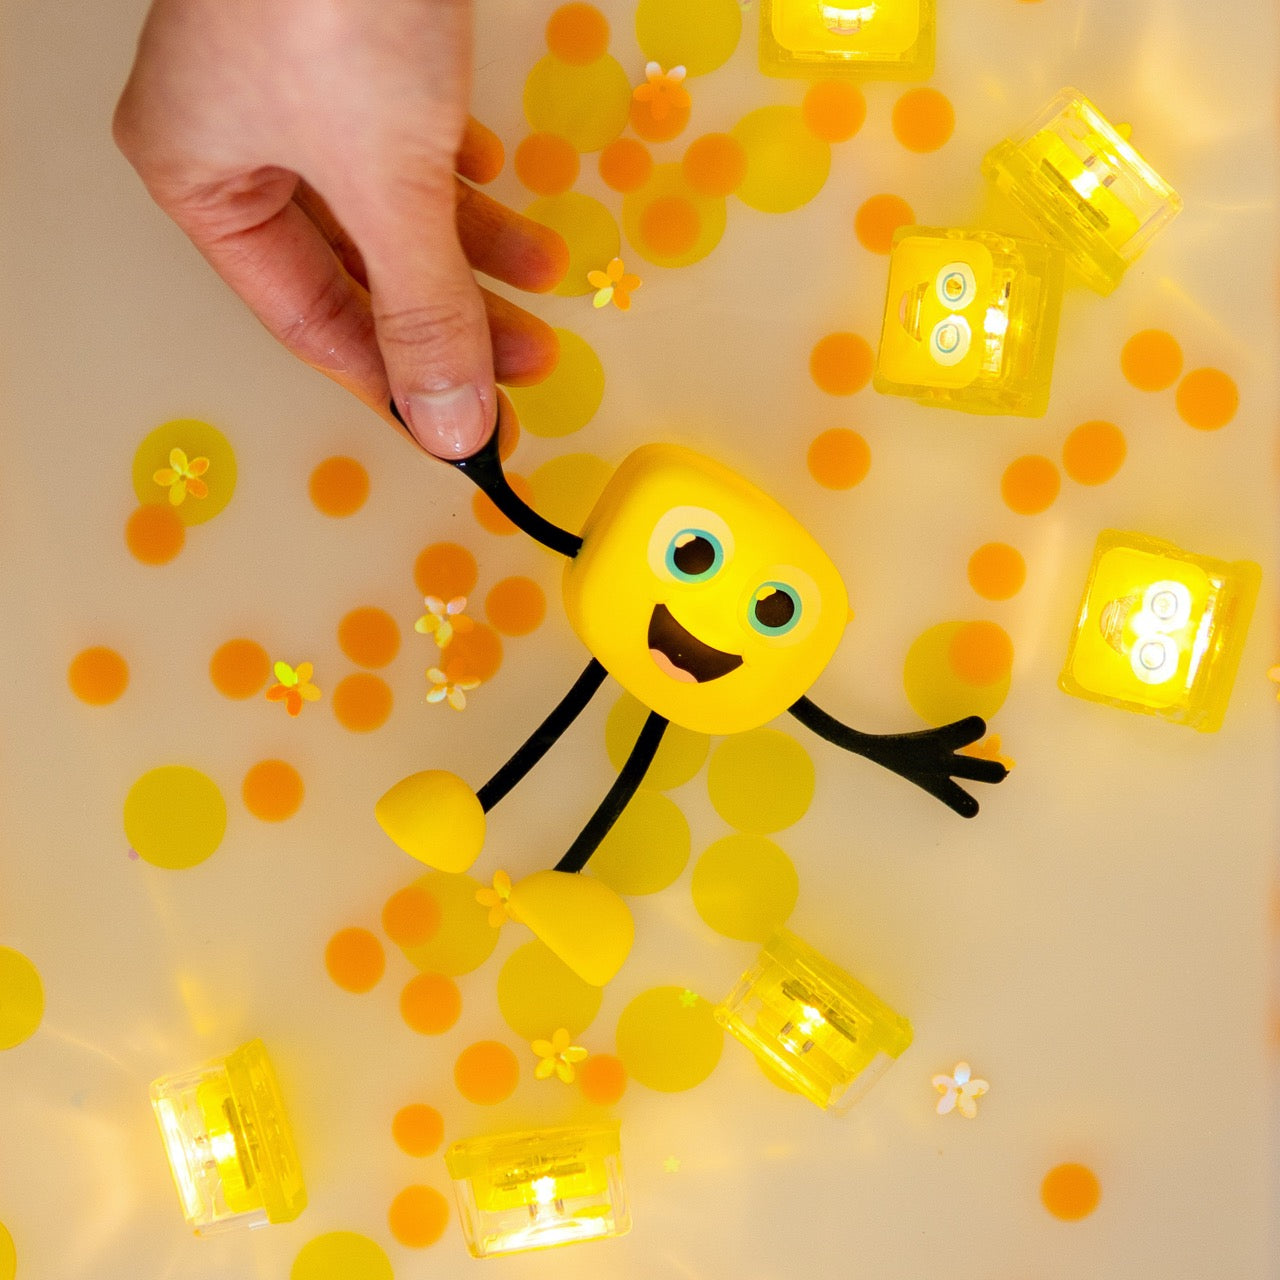 Glo Pals - Light Up Cubes Bath Toys - Alex - Yellow - 4pcs